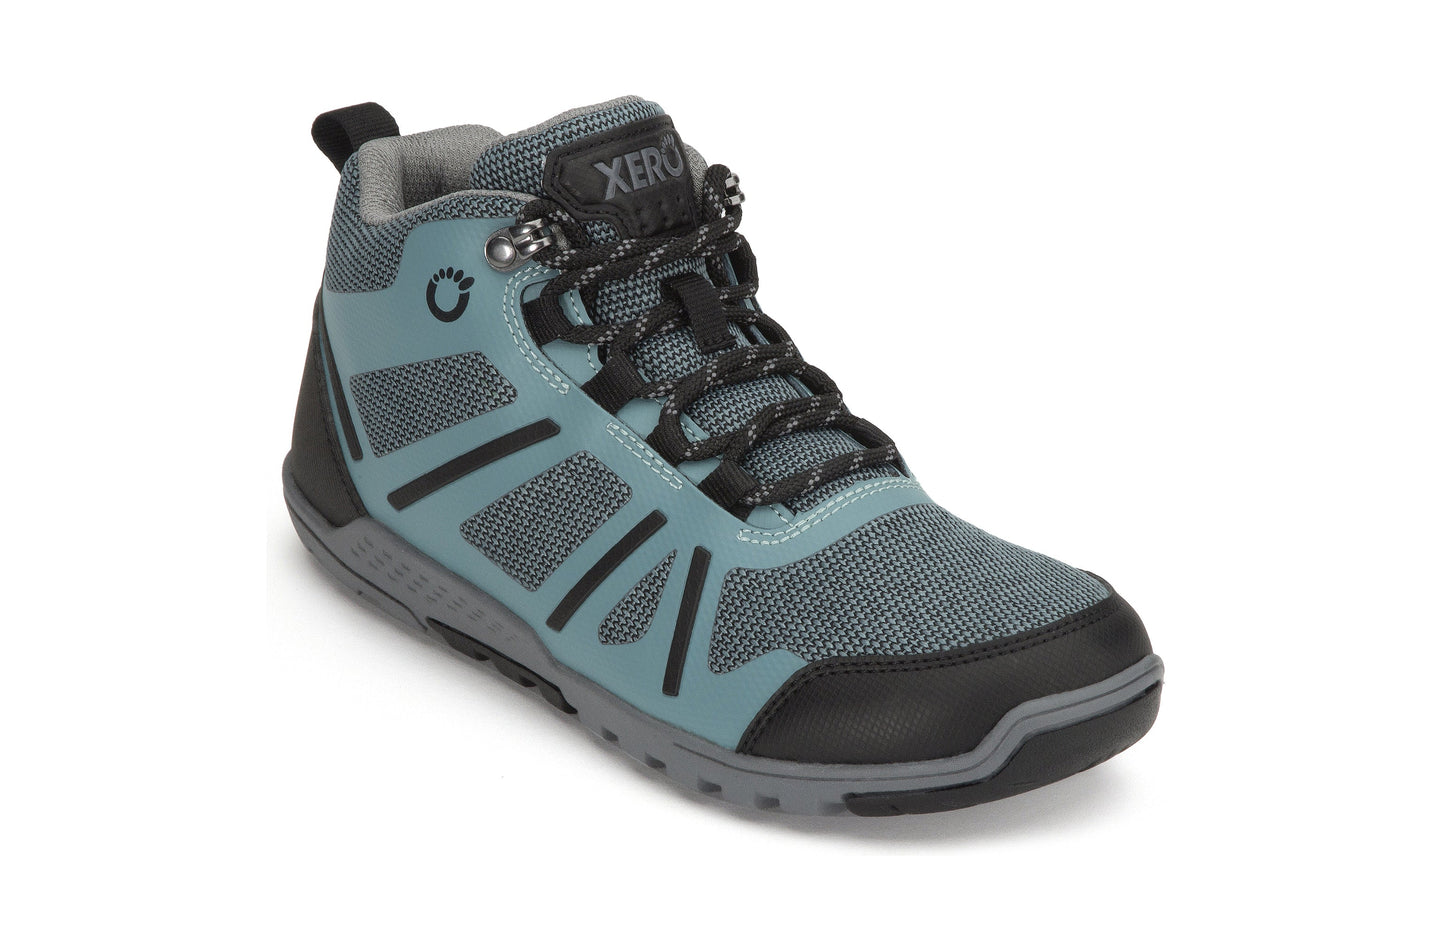 Xero Shoes Daylite Hiker Fusion Womens barfods vandrestøvler til kvinder i farven arctic blue / asphalt, vinklet